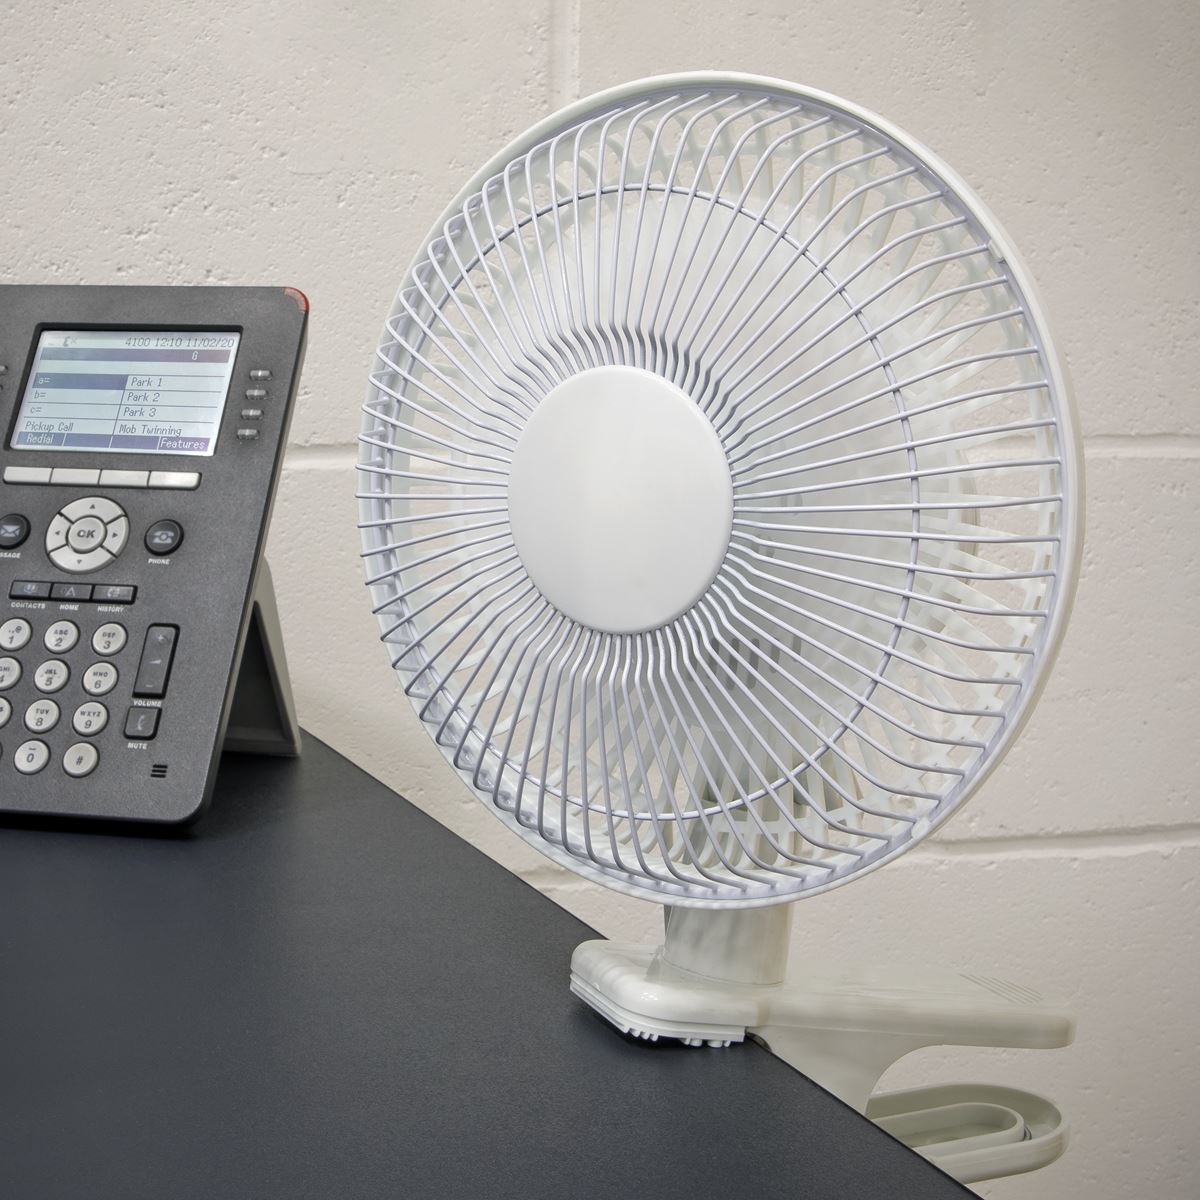 Sealey 8" Clip-On Fan 2-Speed 230V Desk Table Air Conditioning Tilt Swivel Head